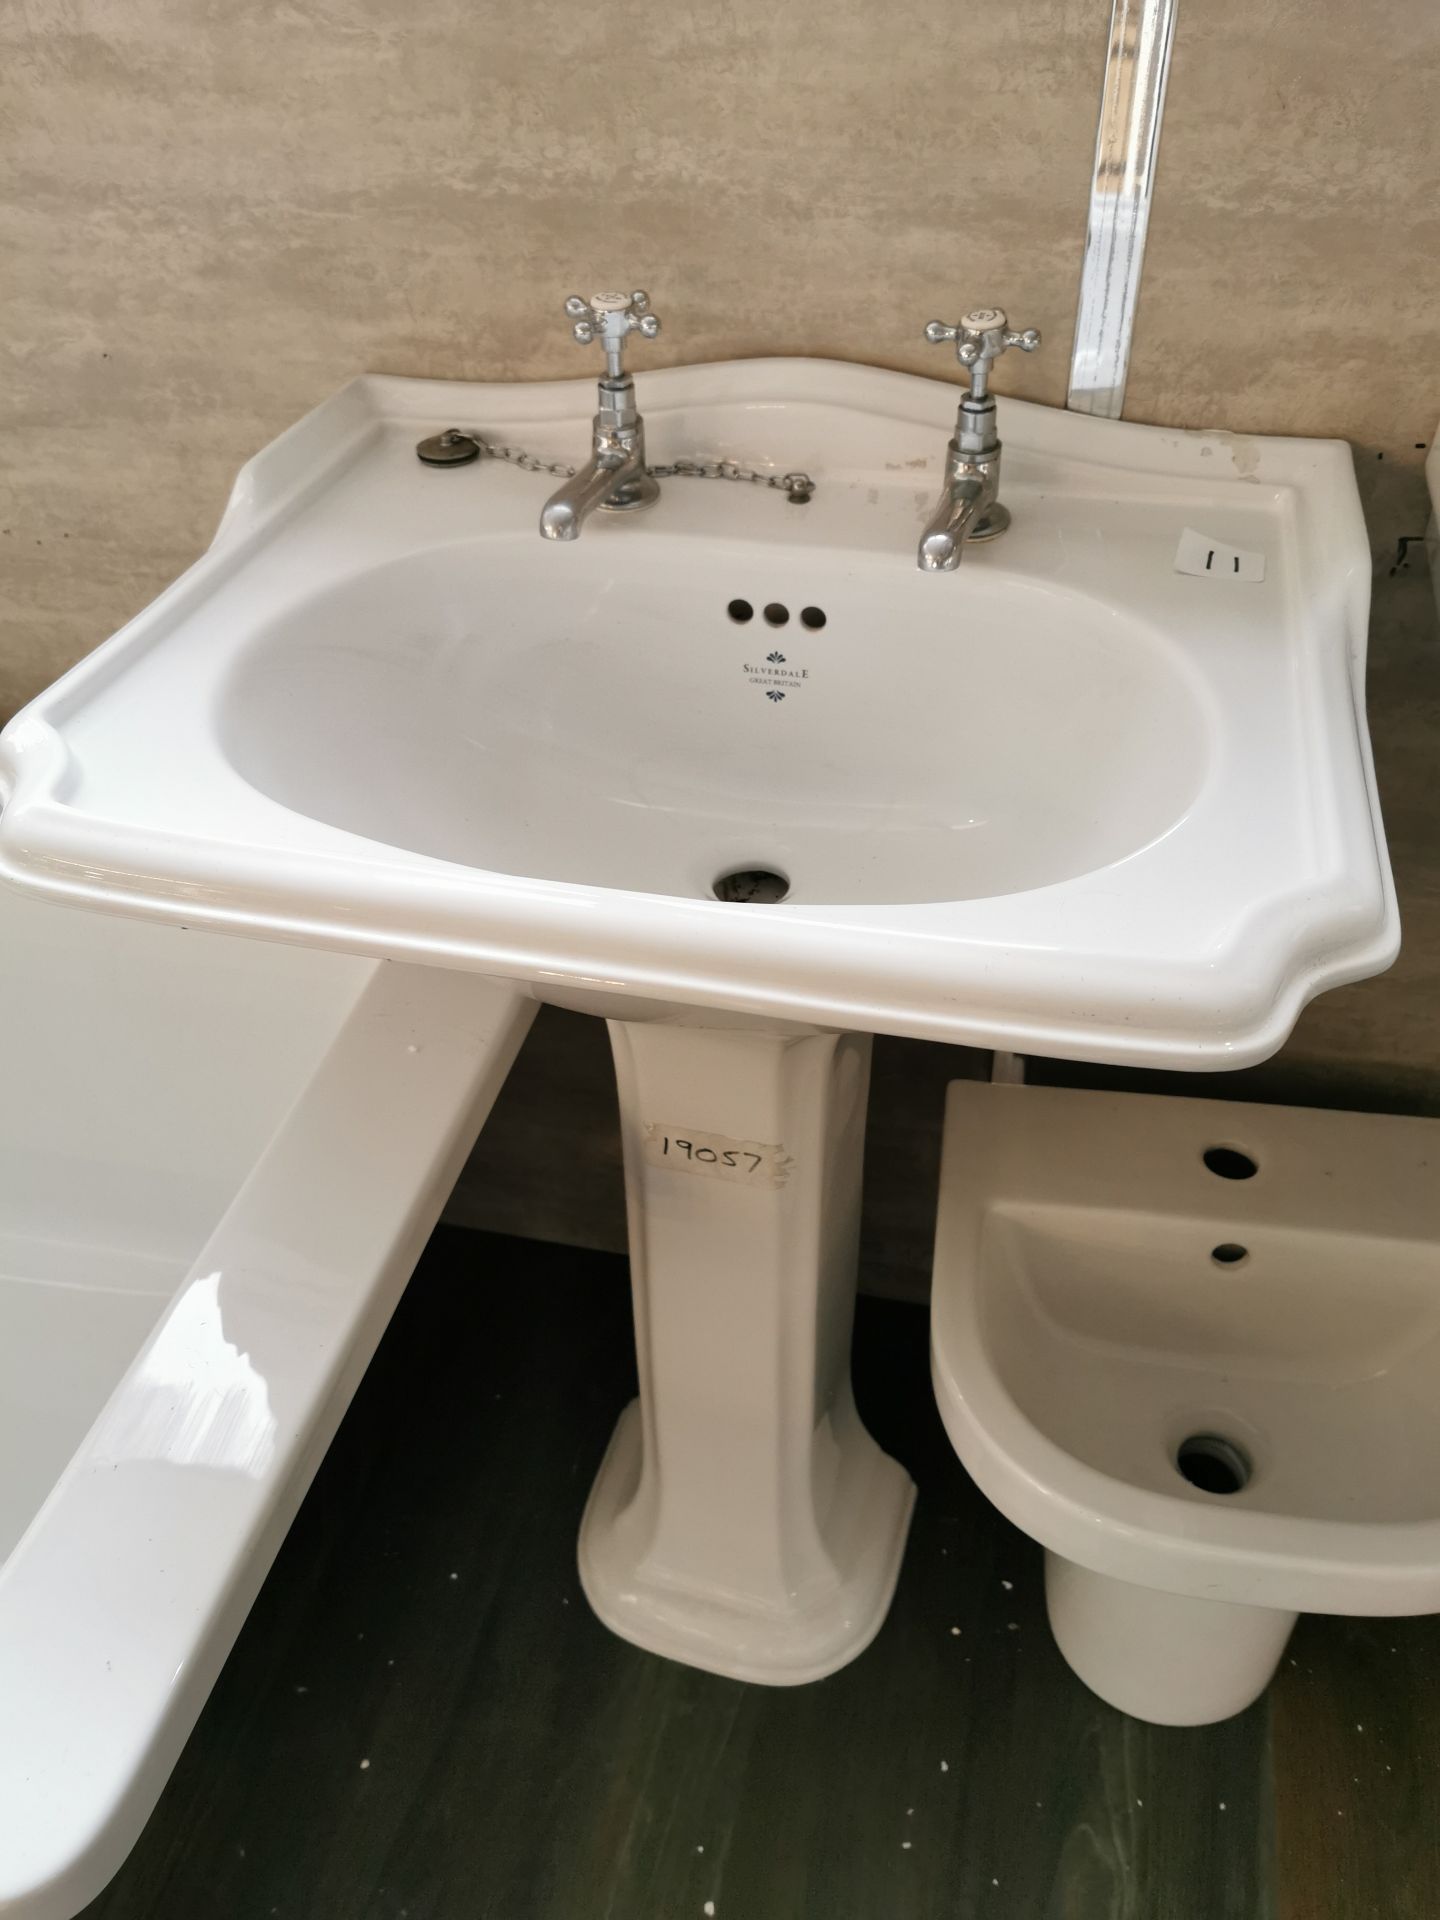 Ex-Display Silverdale 2pc Pedestal Sink & Stand Pair RRP £379